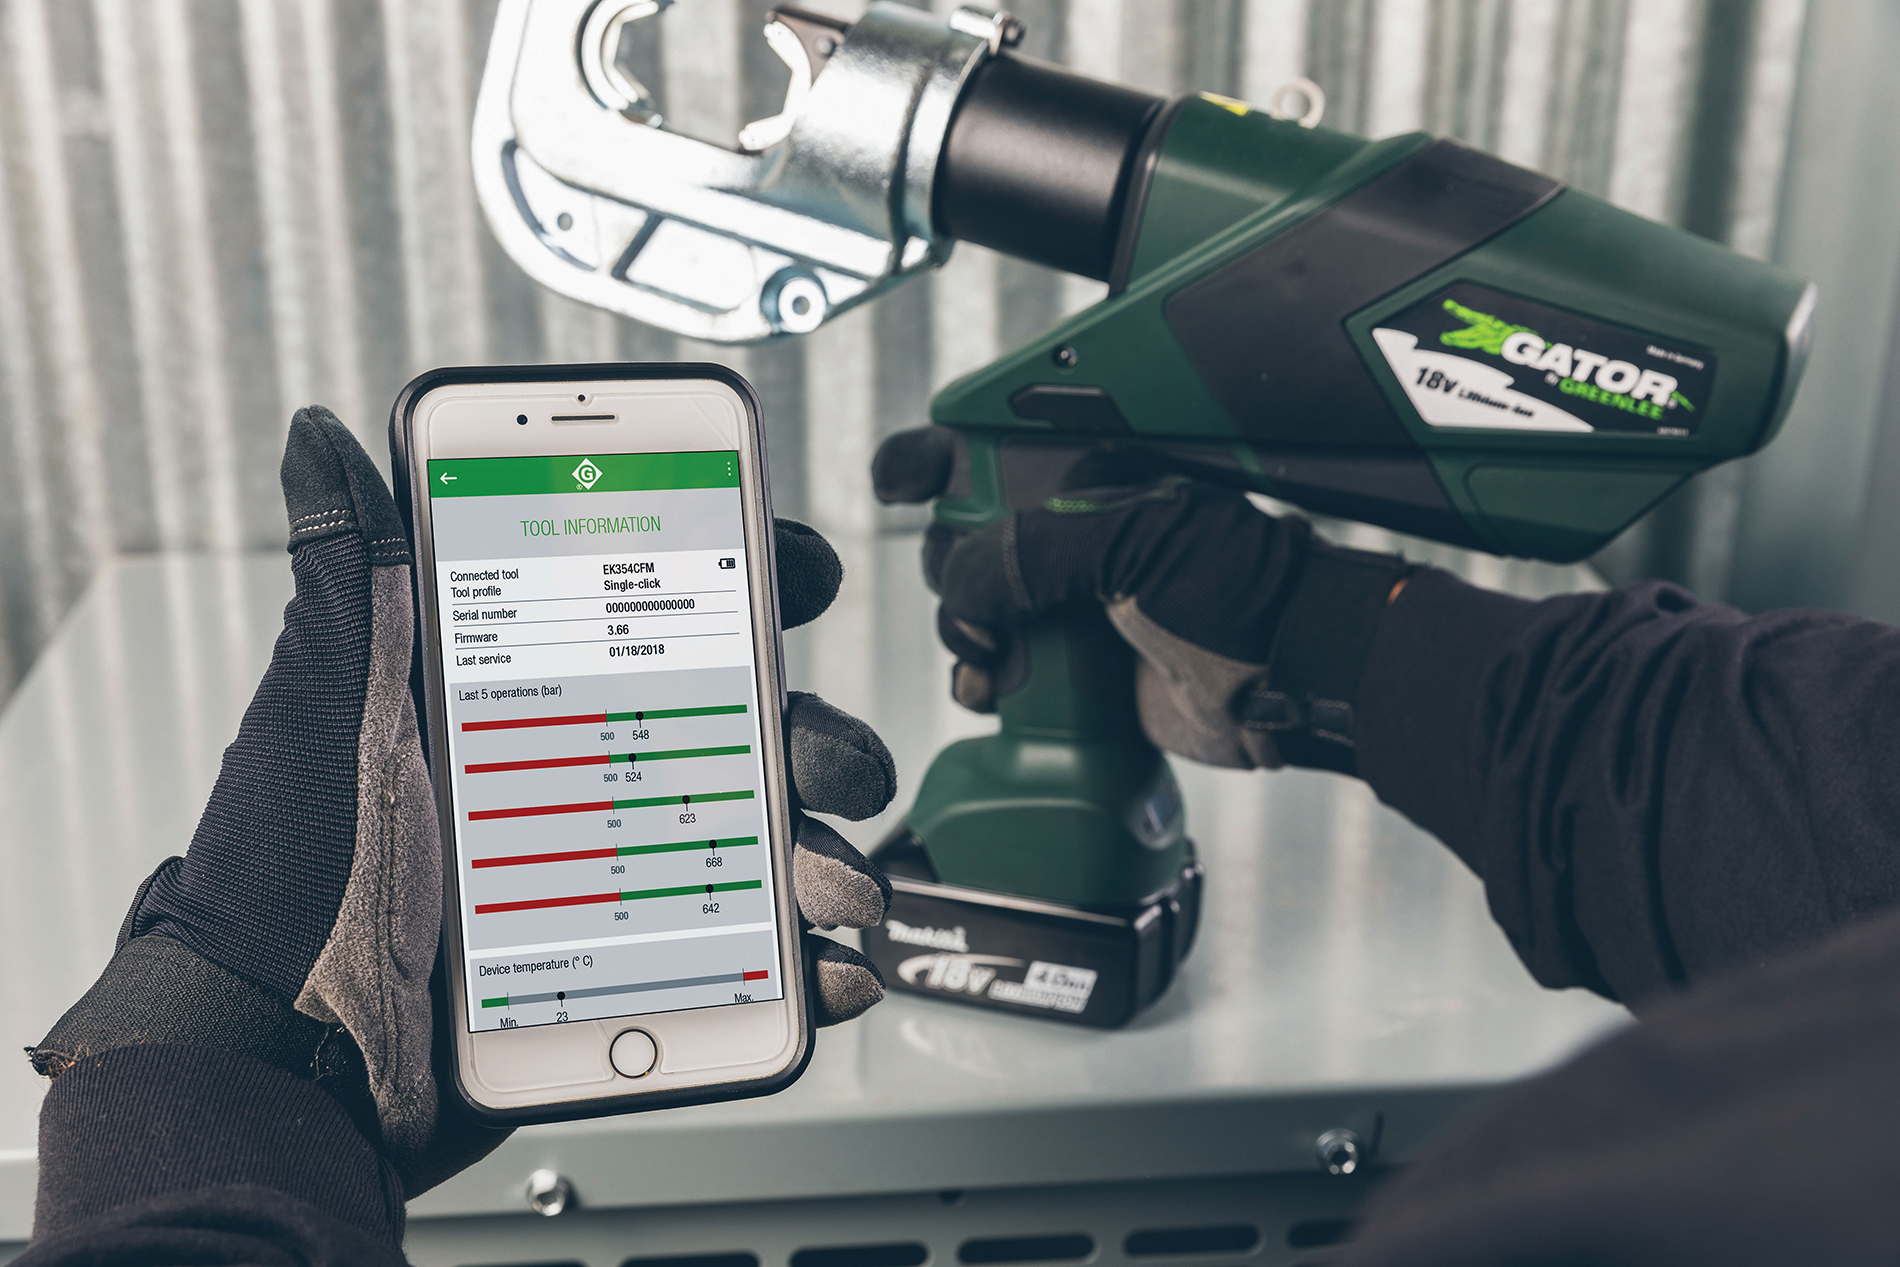 Greenlee's i-press Battery Tool-Monitoring App